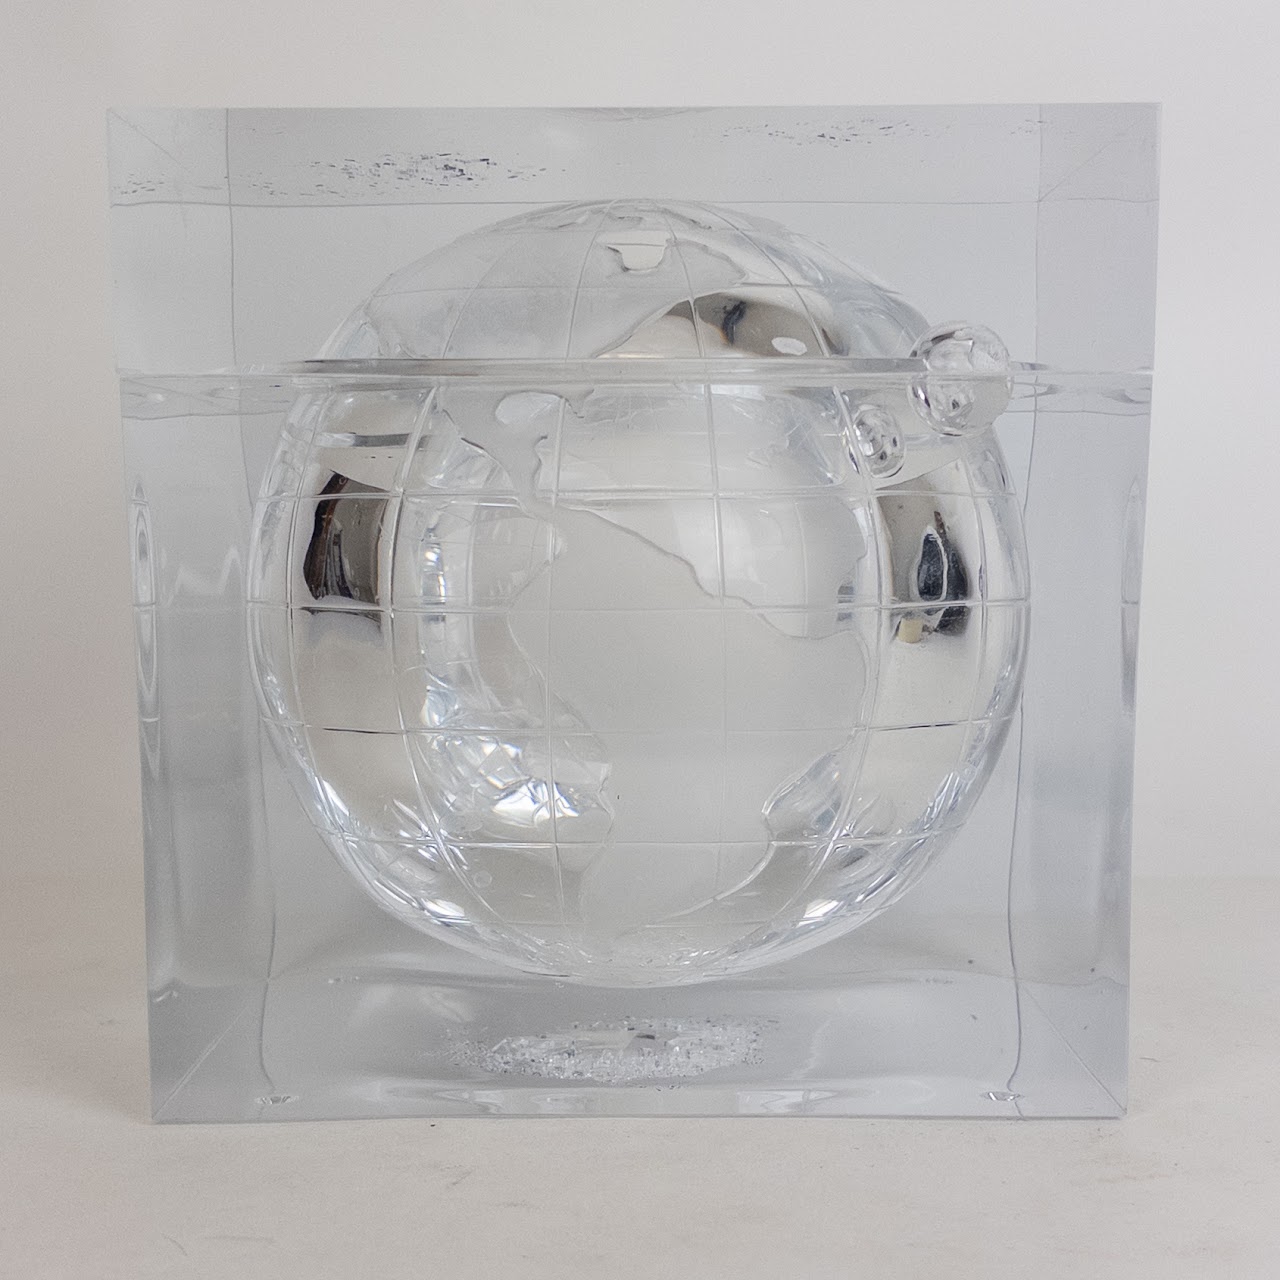 World Globe Lucite Acrylic Ice Bucket By Alessandro Albrizzi